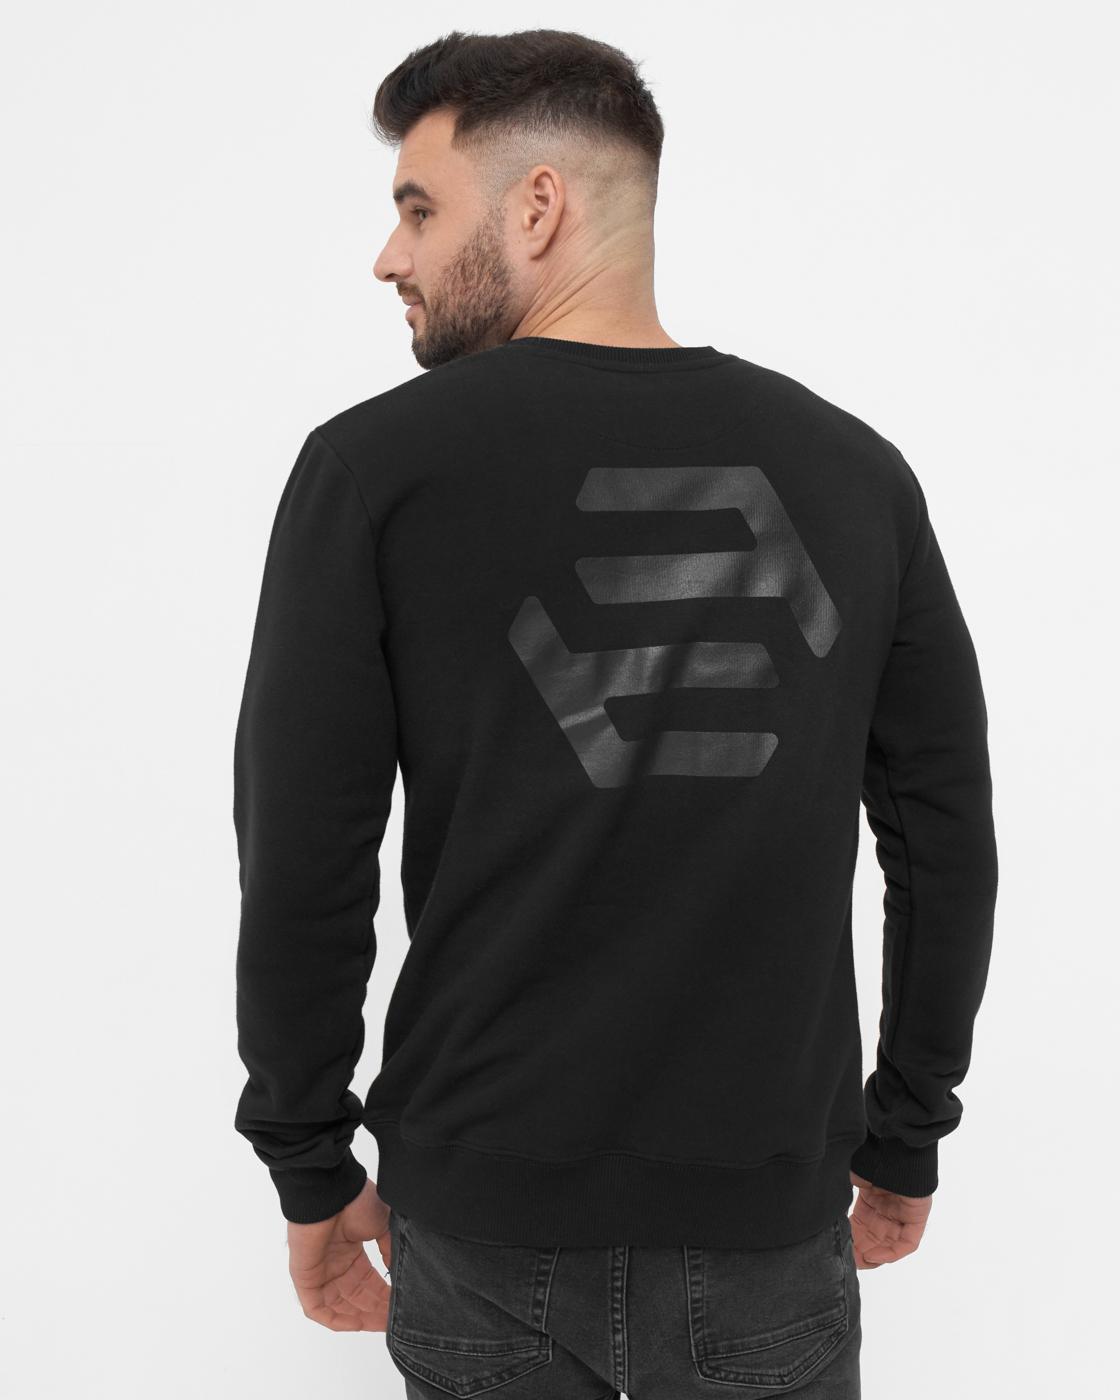 Sweatshirt SOFTFLIX black XL